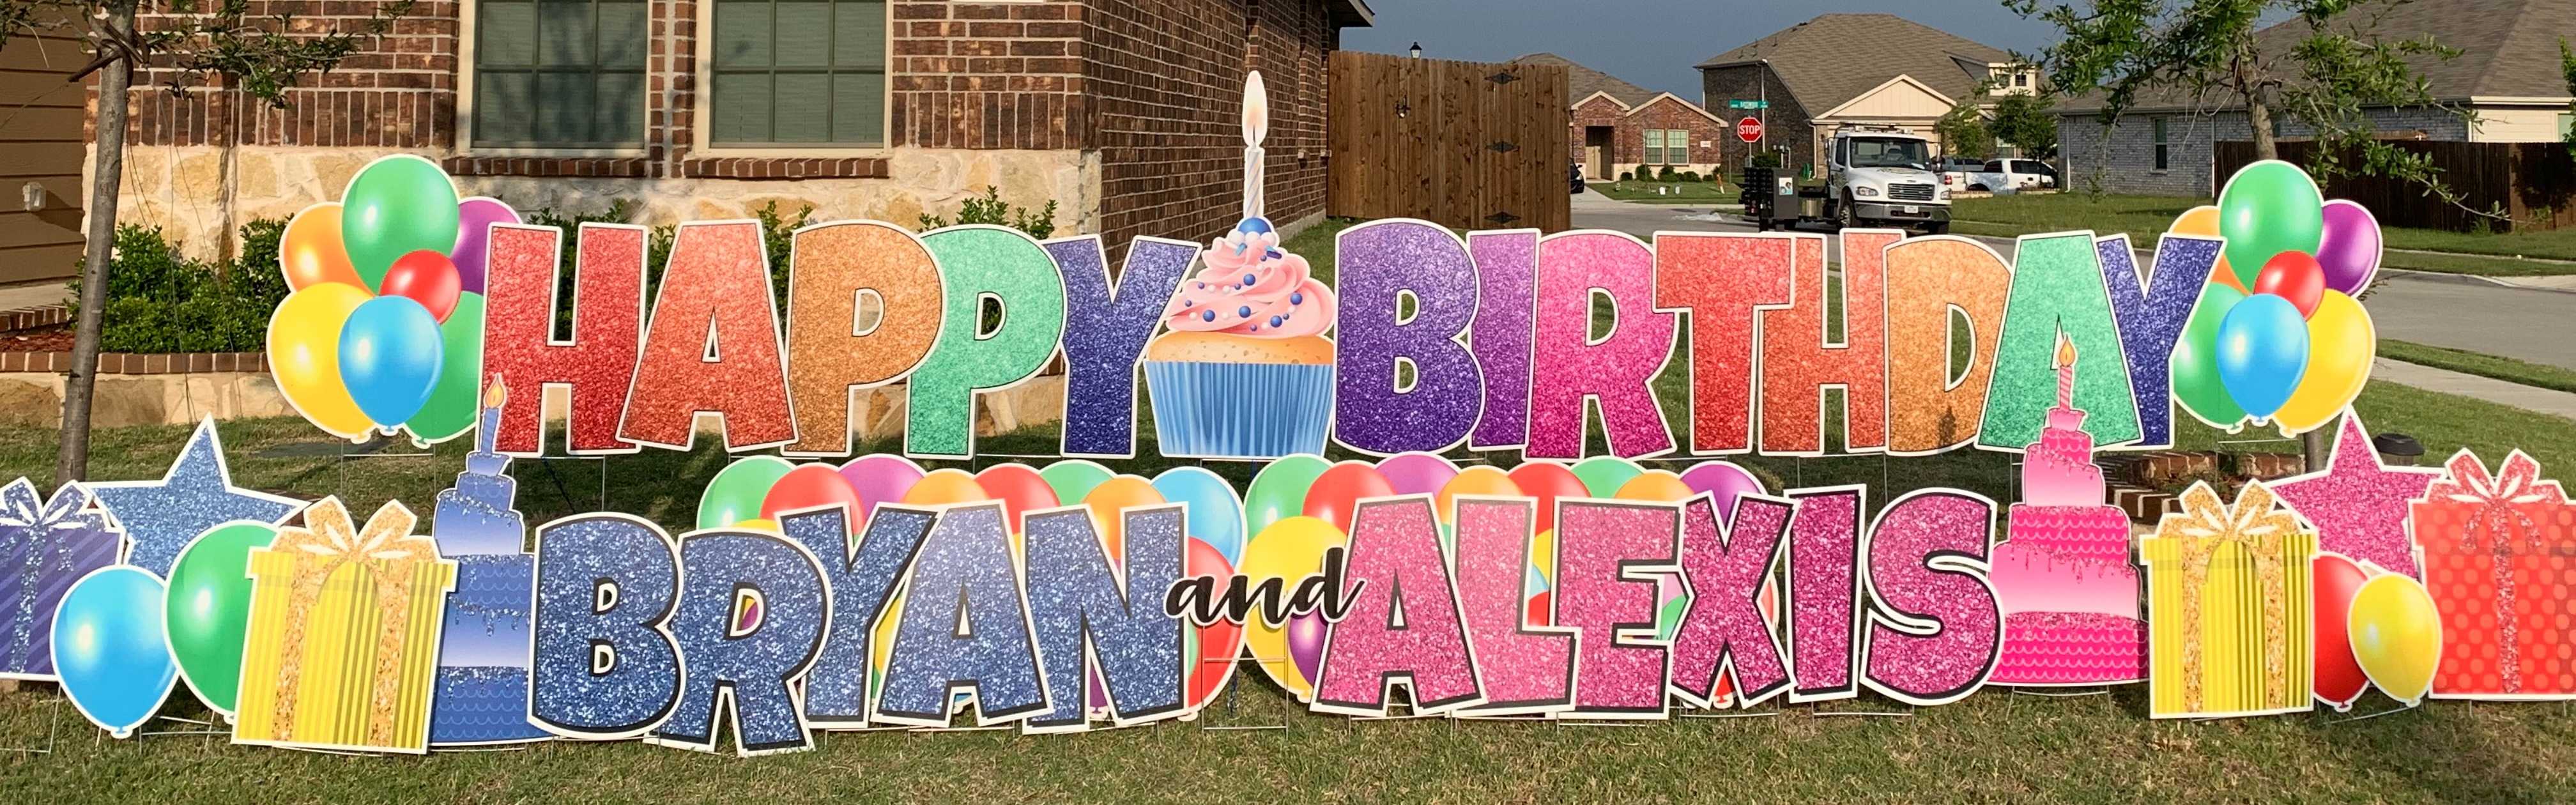 Yard card sign happy birthday cupcake 